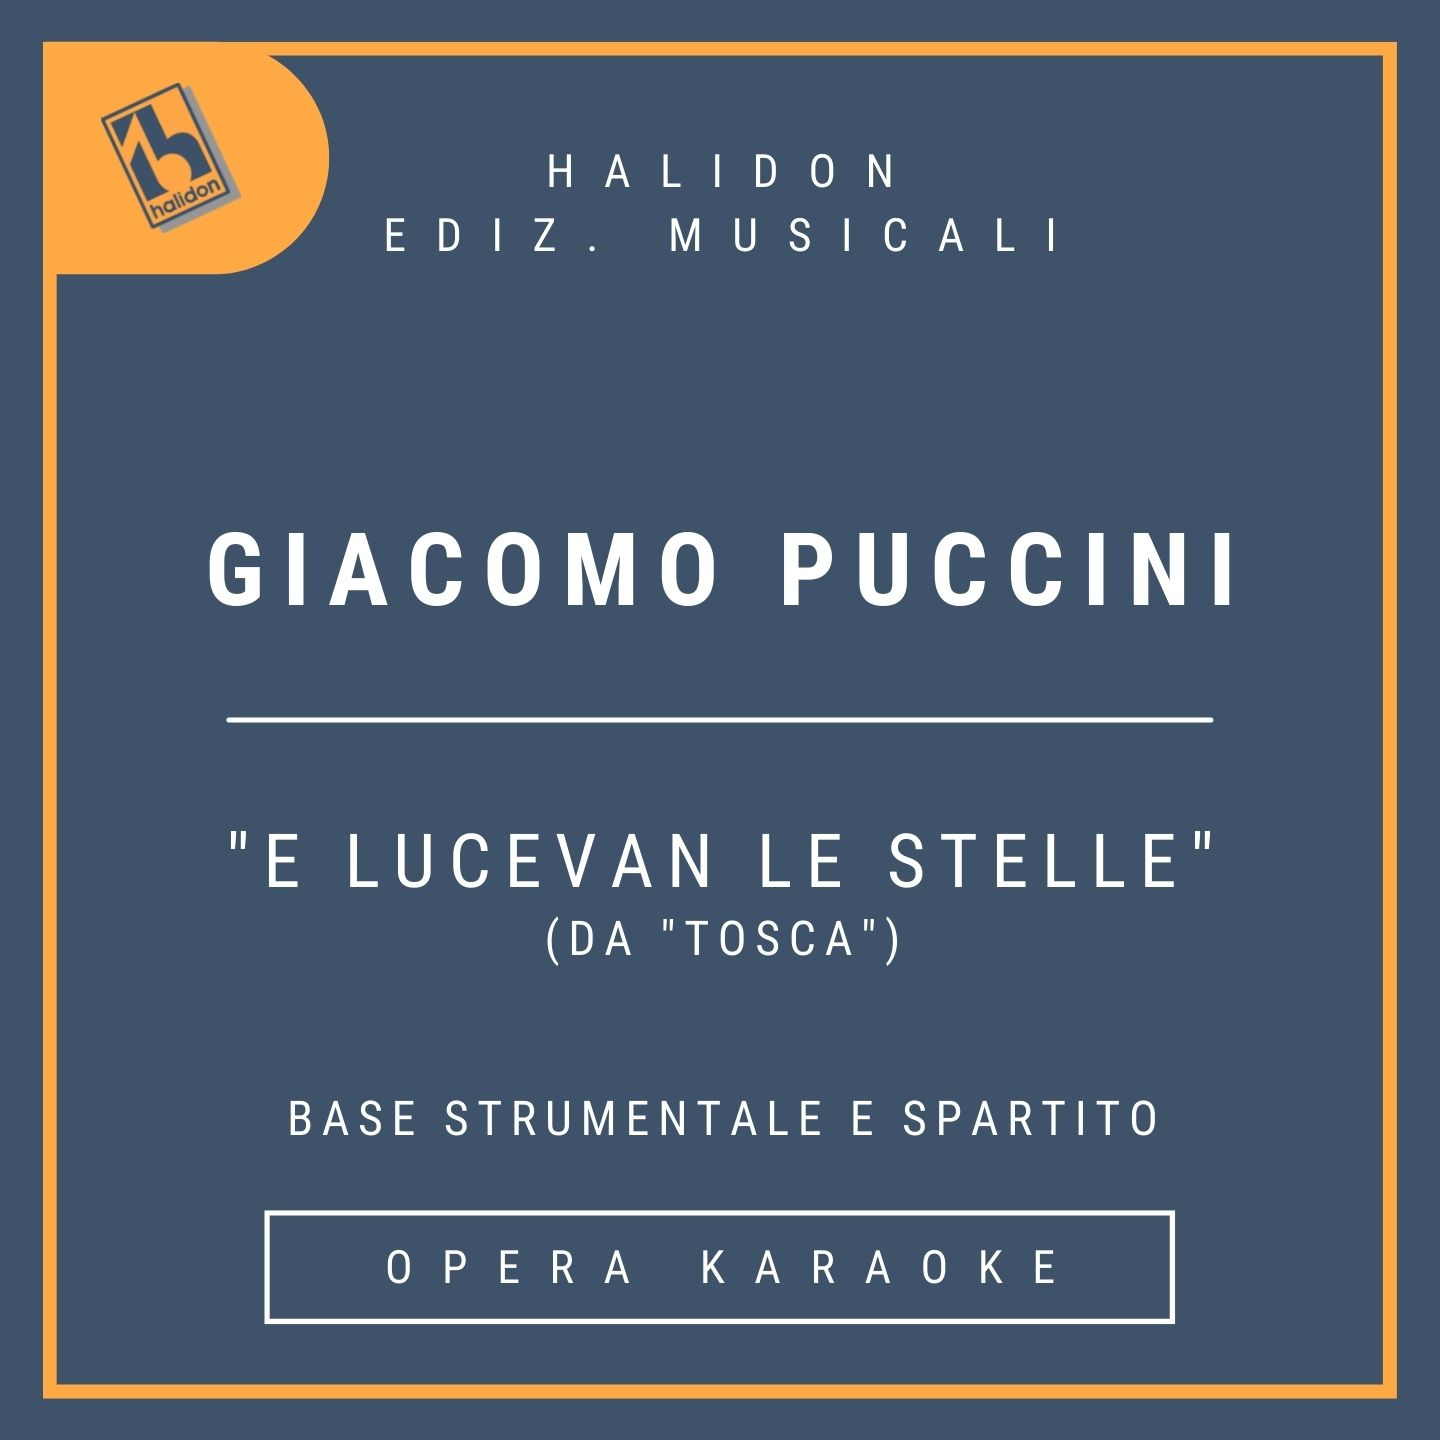 Giacomo Puccini - E lucevan le stelle (from 'Tosca') - Cavaradossi Aria (tenor) - Instrumental track + sheet